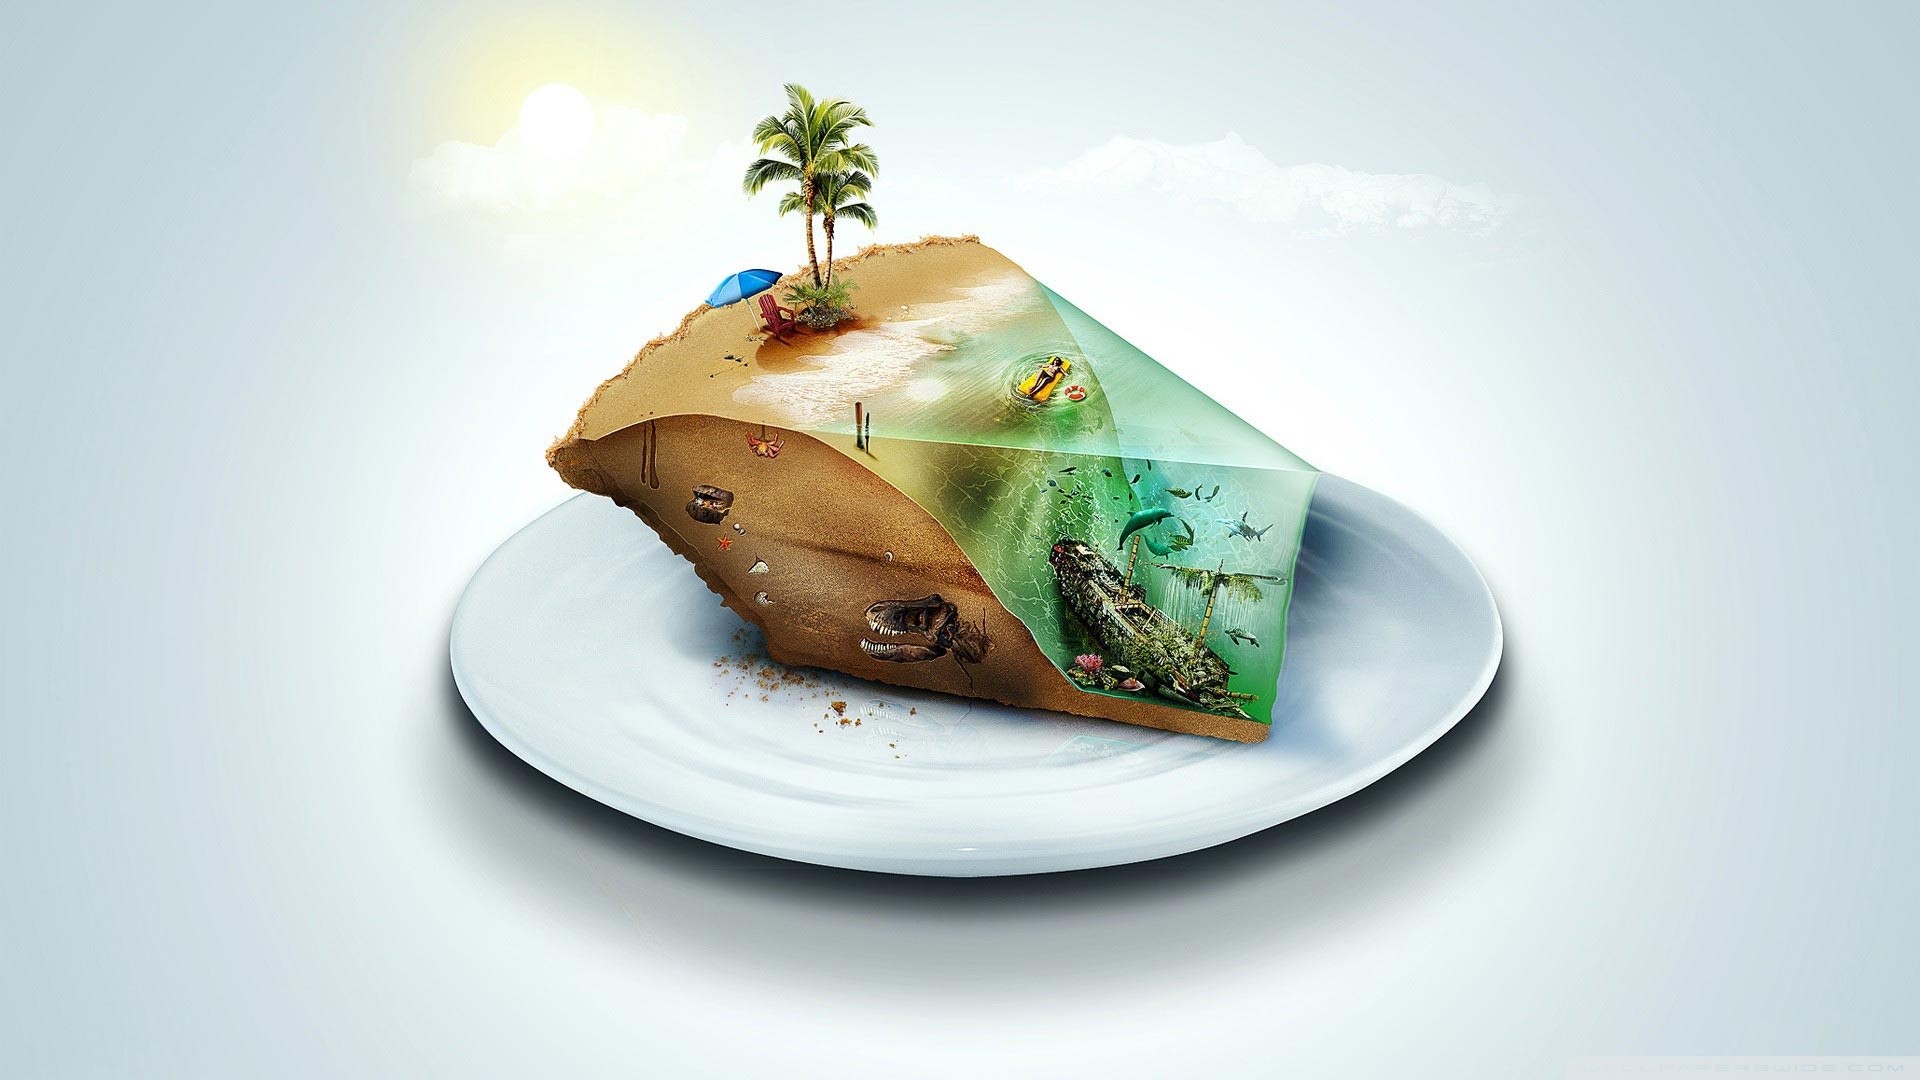 Digital Art Piece Of Cake Beach Shipwreck Palm Trees Dinosaurs Fish Tropic Island Tropical Water 1920x1080